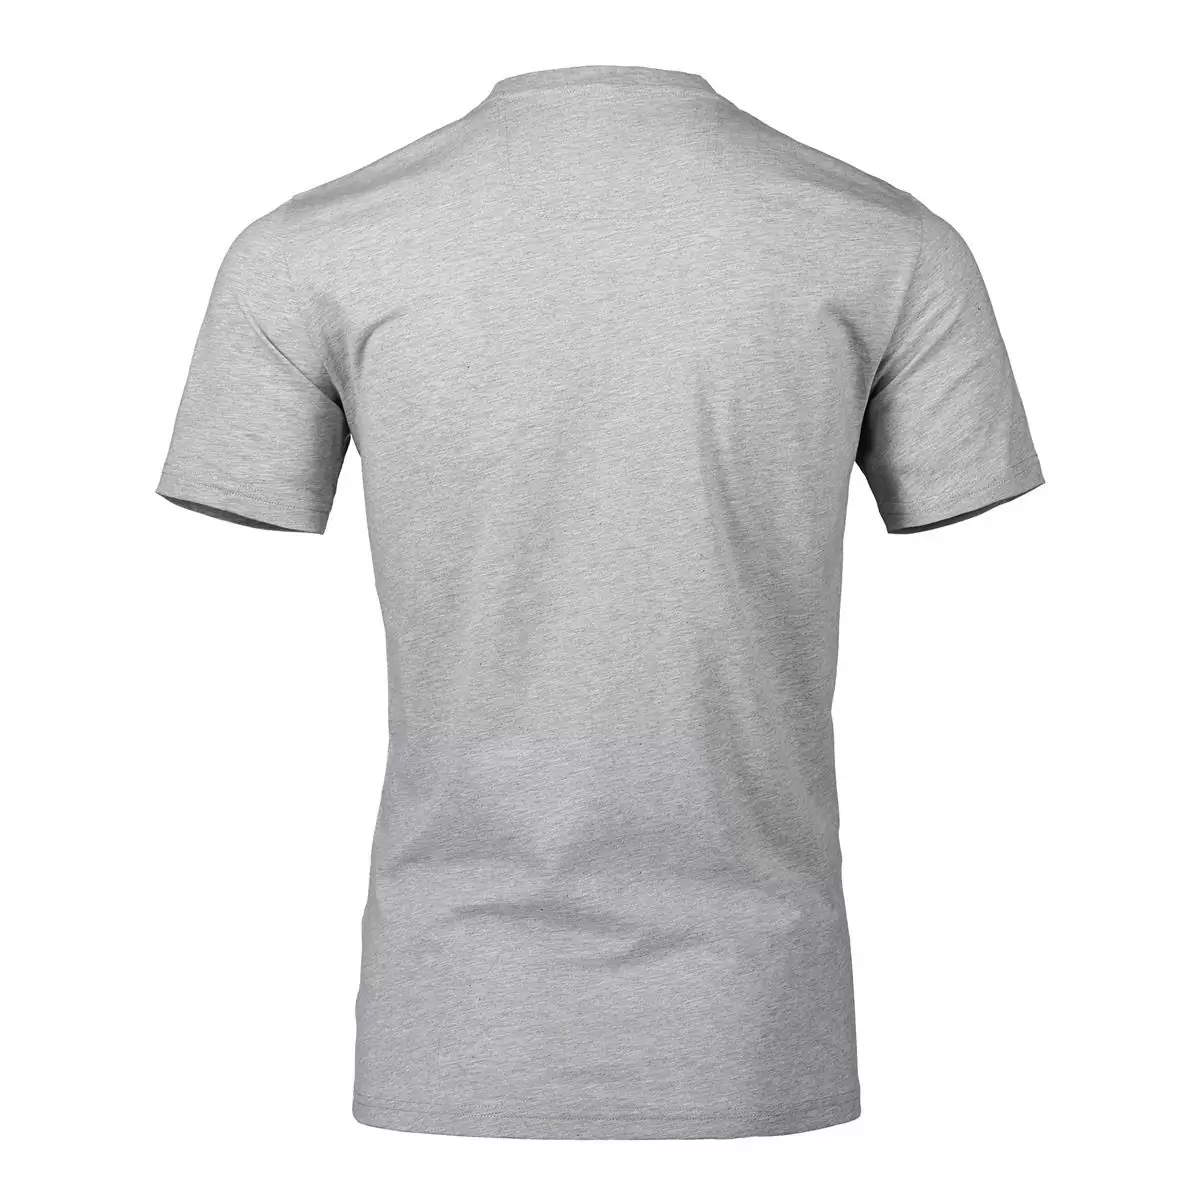 camiseta de manga curta cinza tamanho S #1